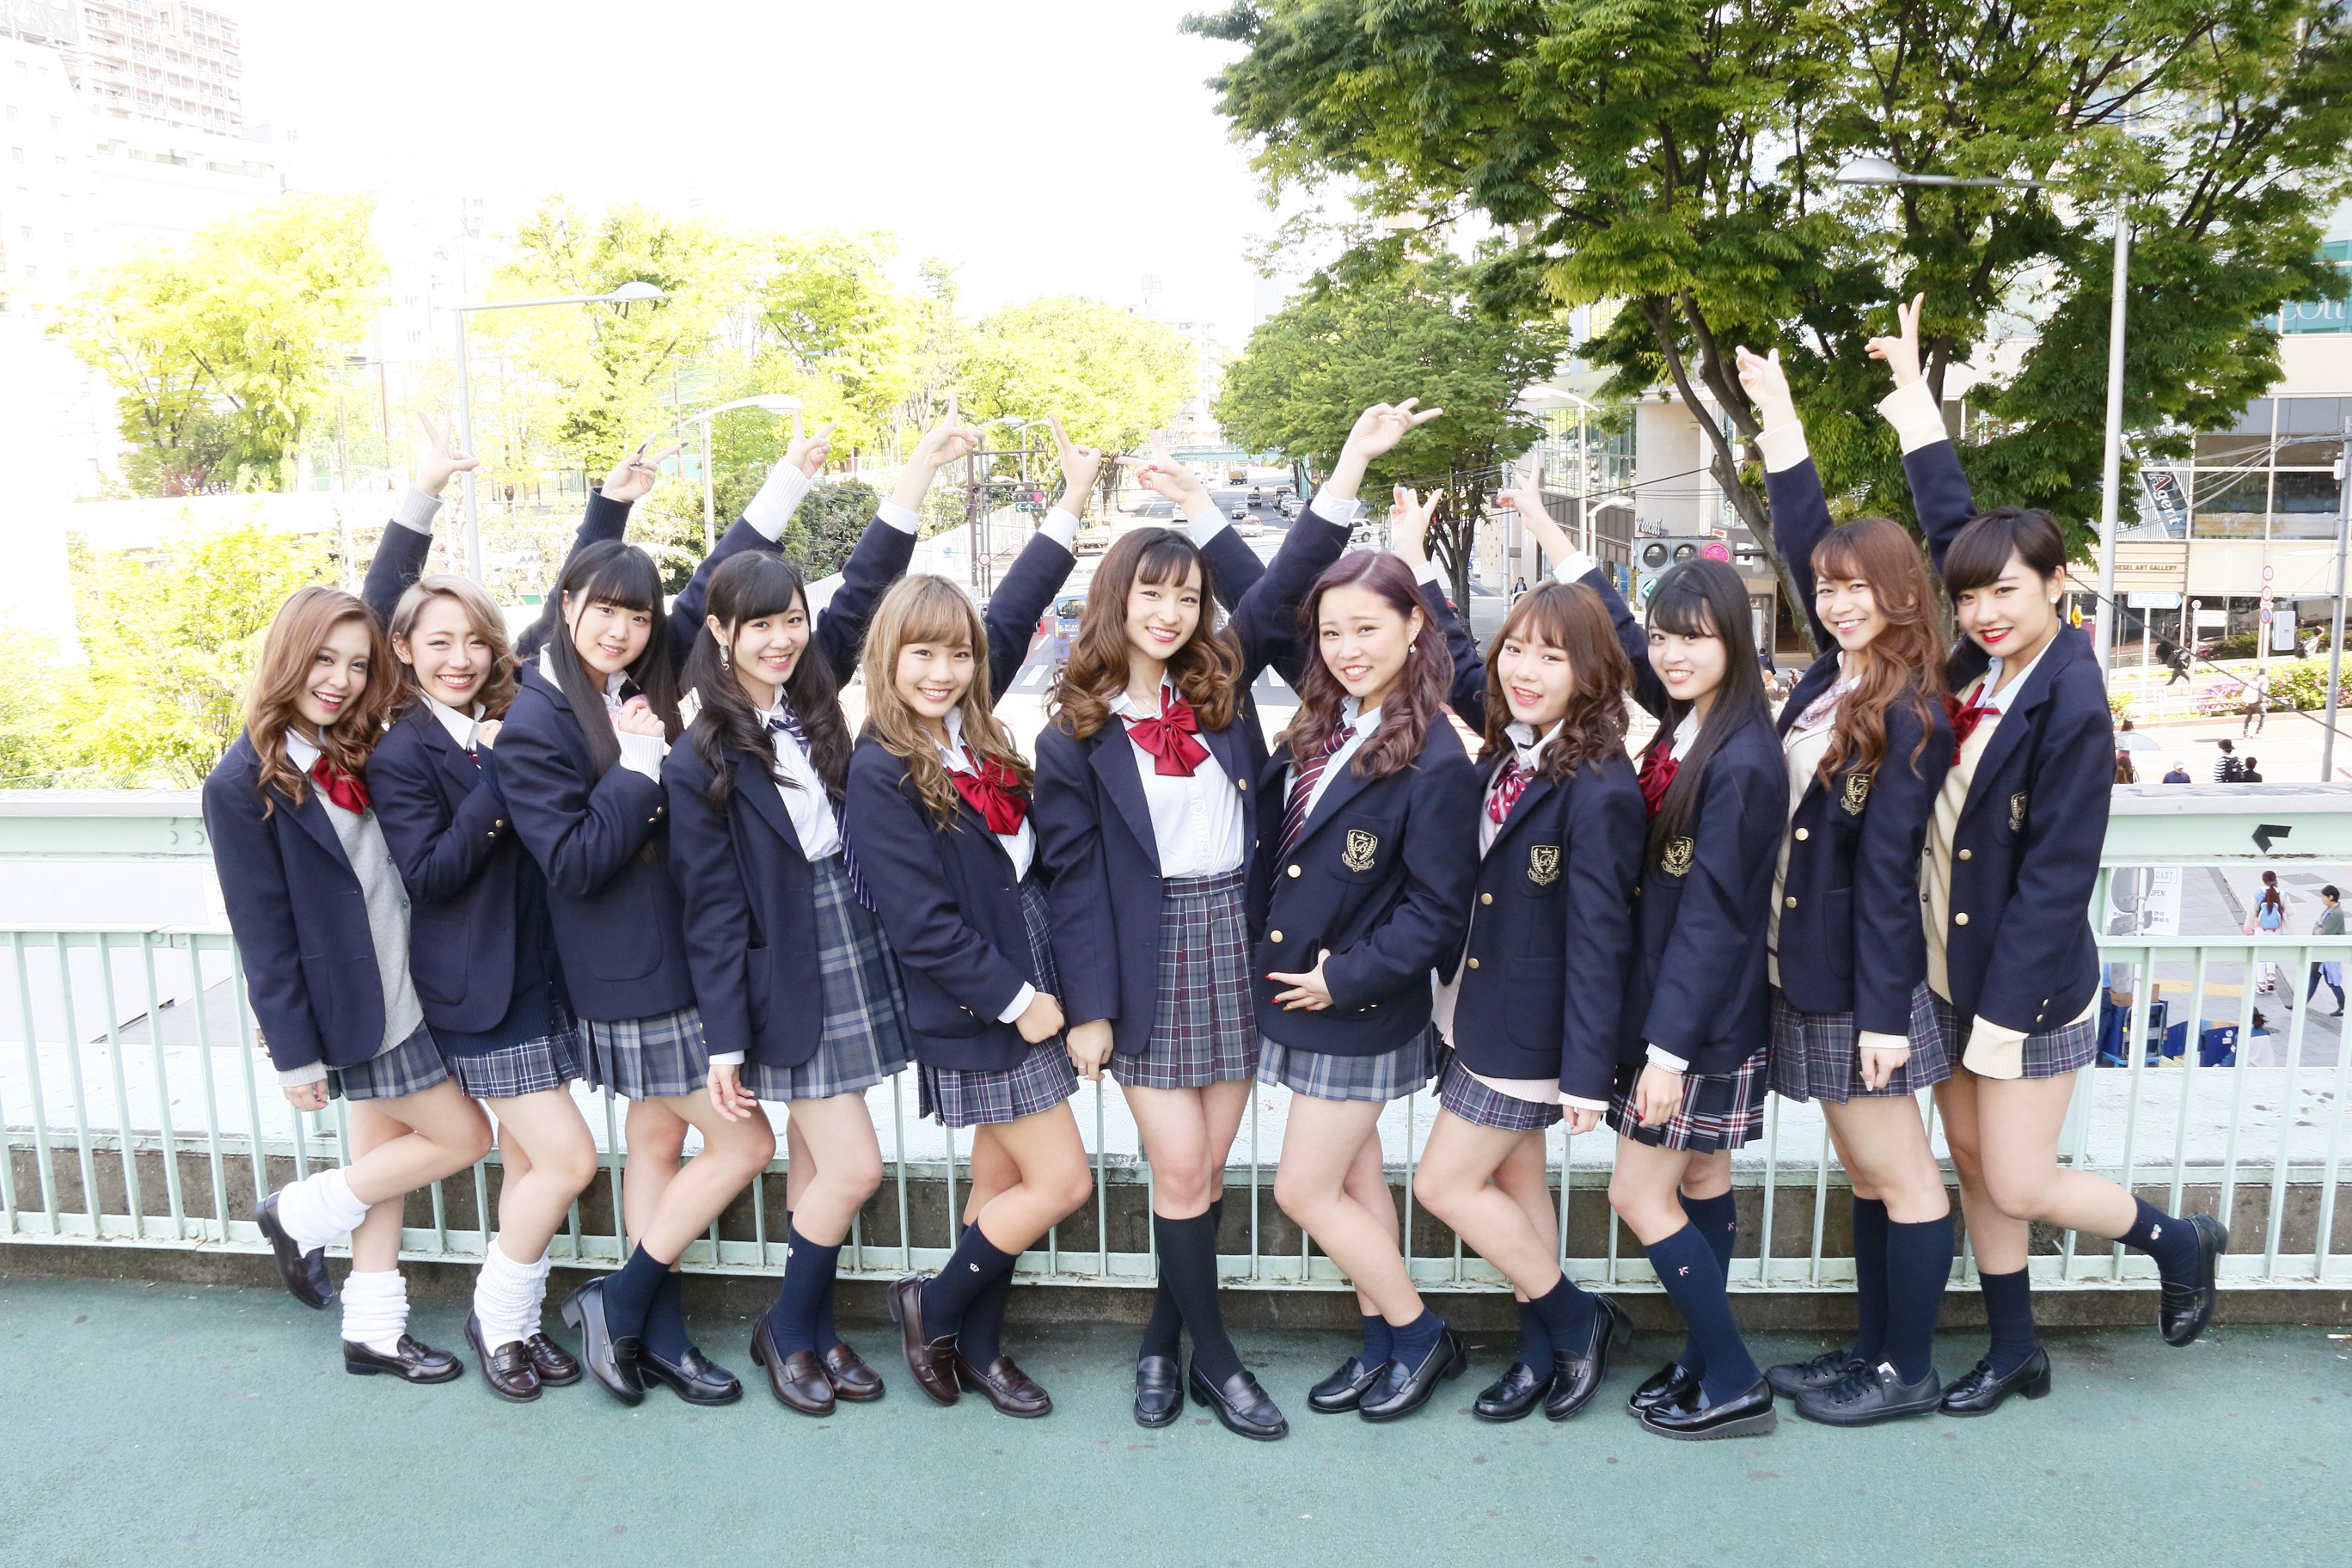 Japanese schoolgirls dominate